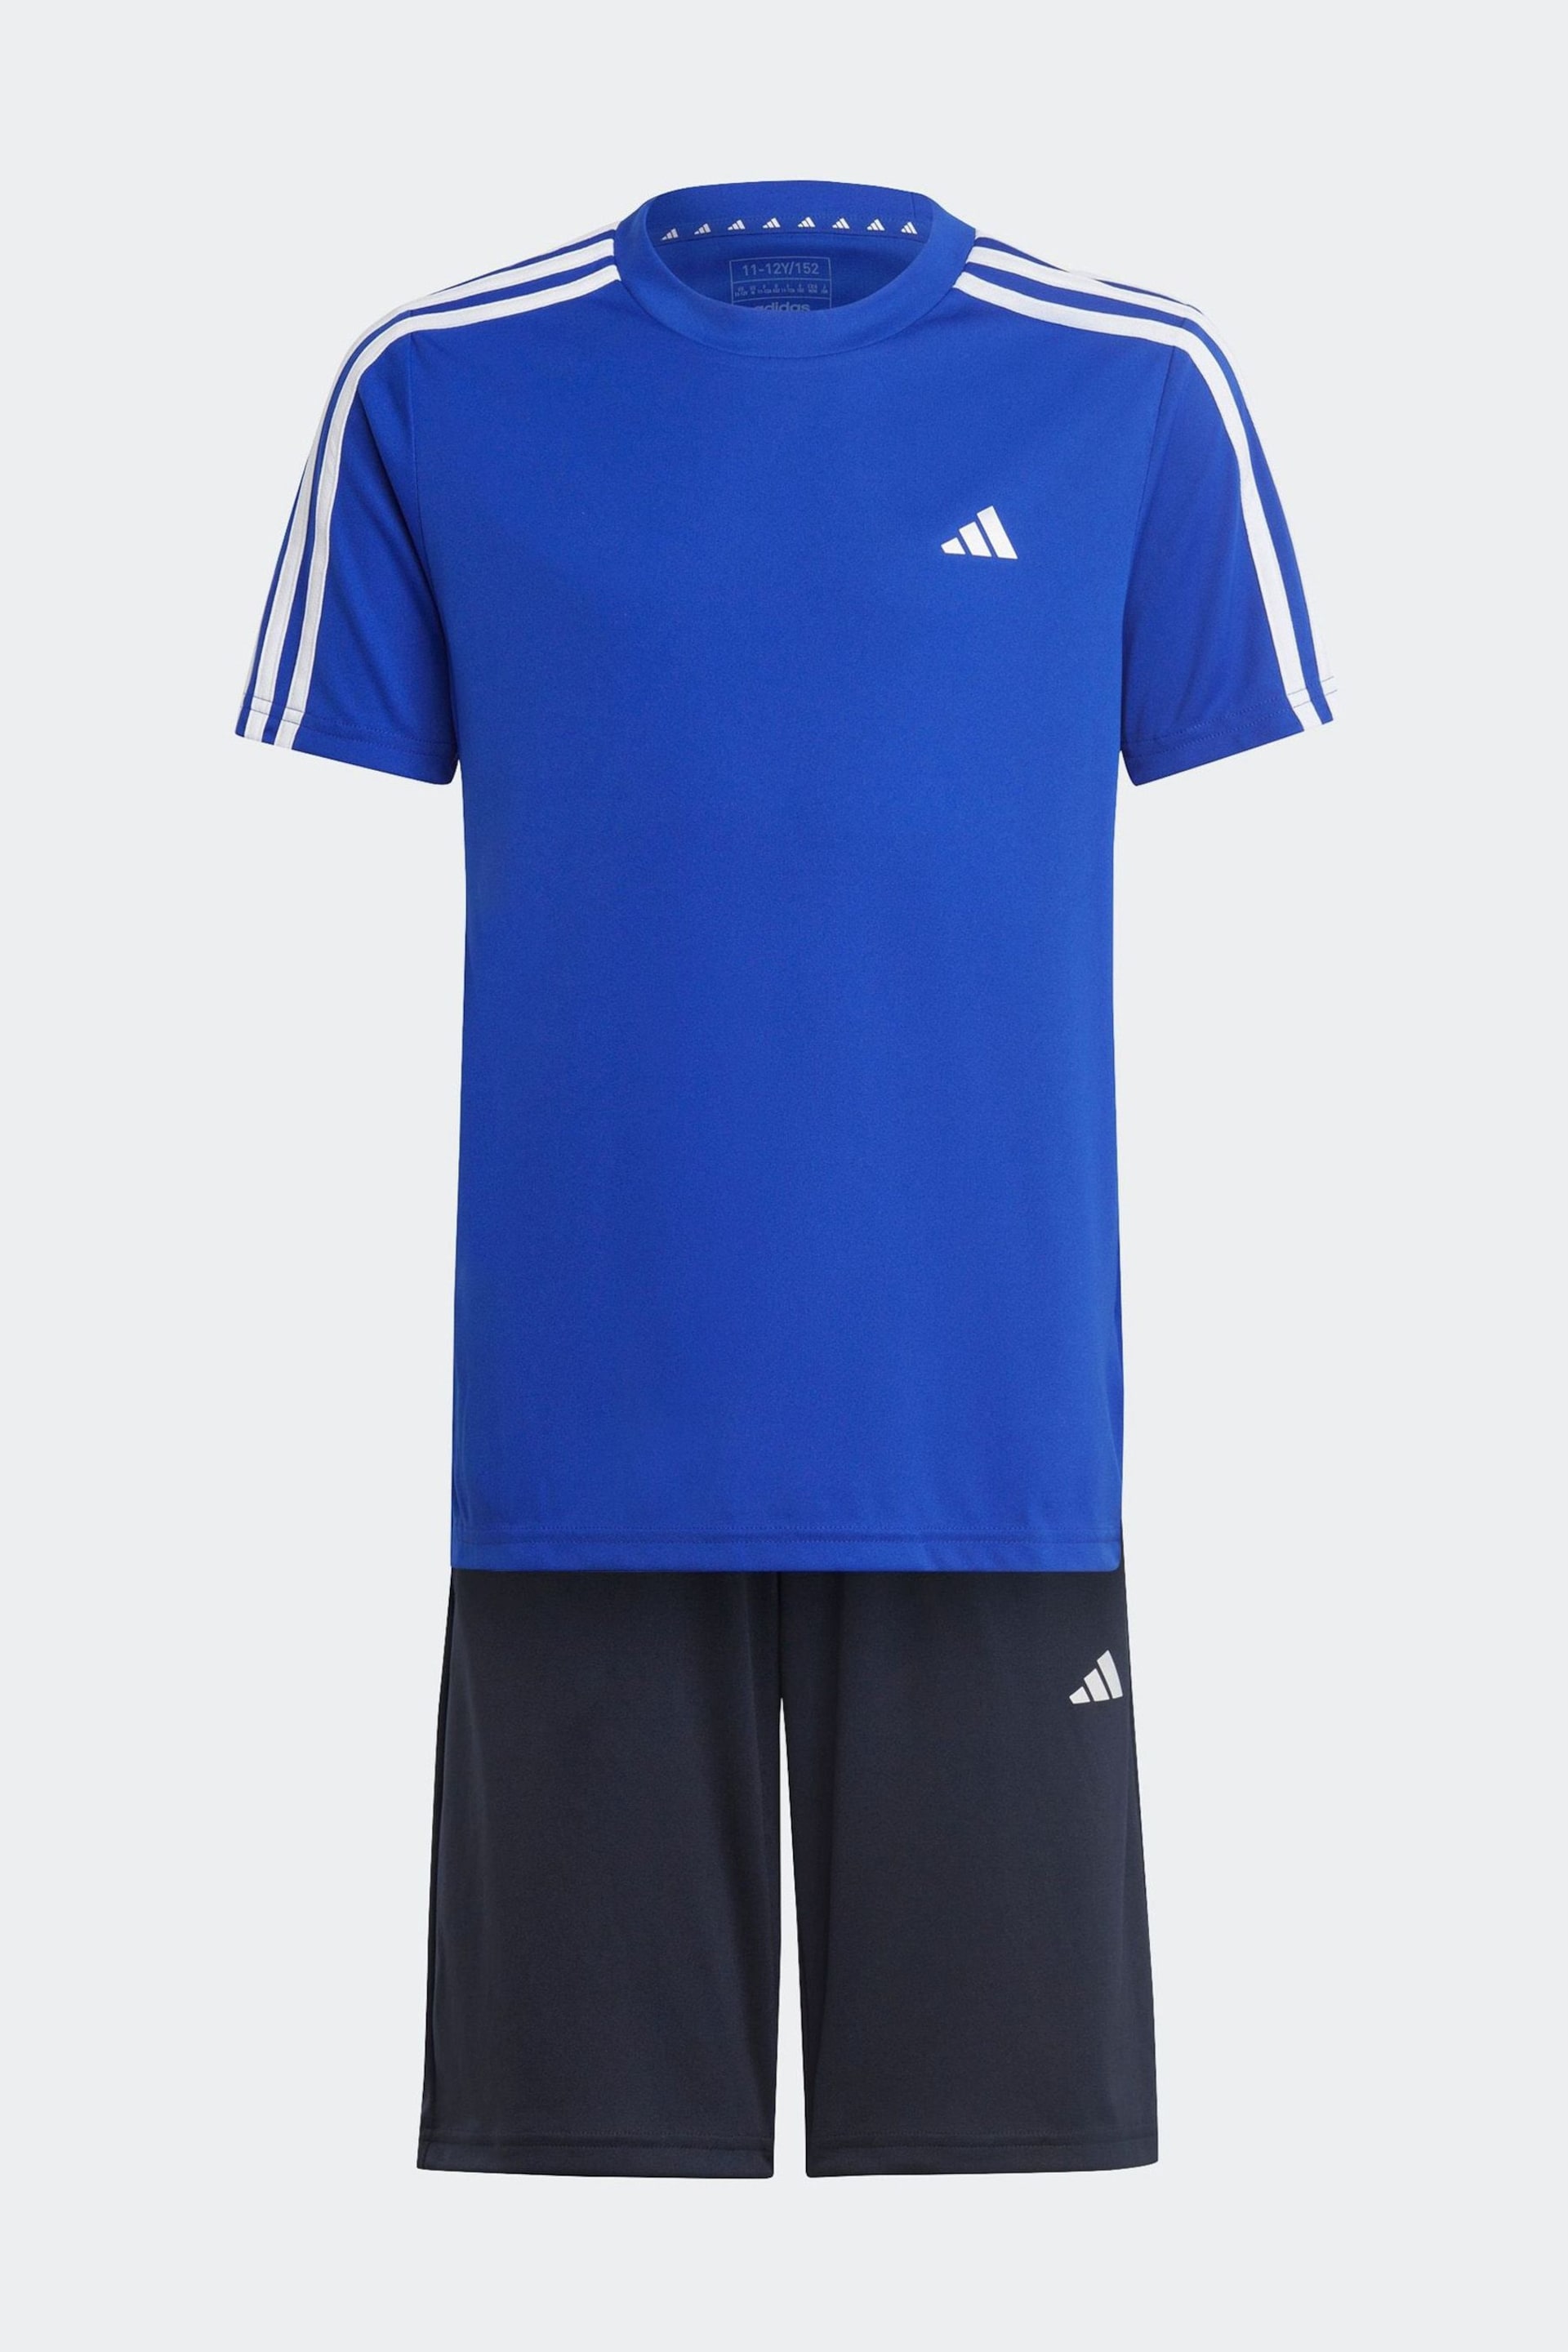 adidas Blue/Black Sportswear Train Essentials Aeroready 3-Stripes Regular-Fit Training Set - Image 1 of 6